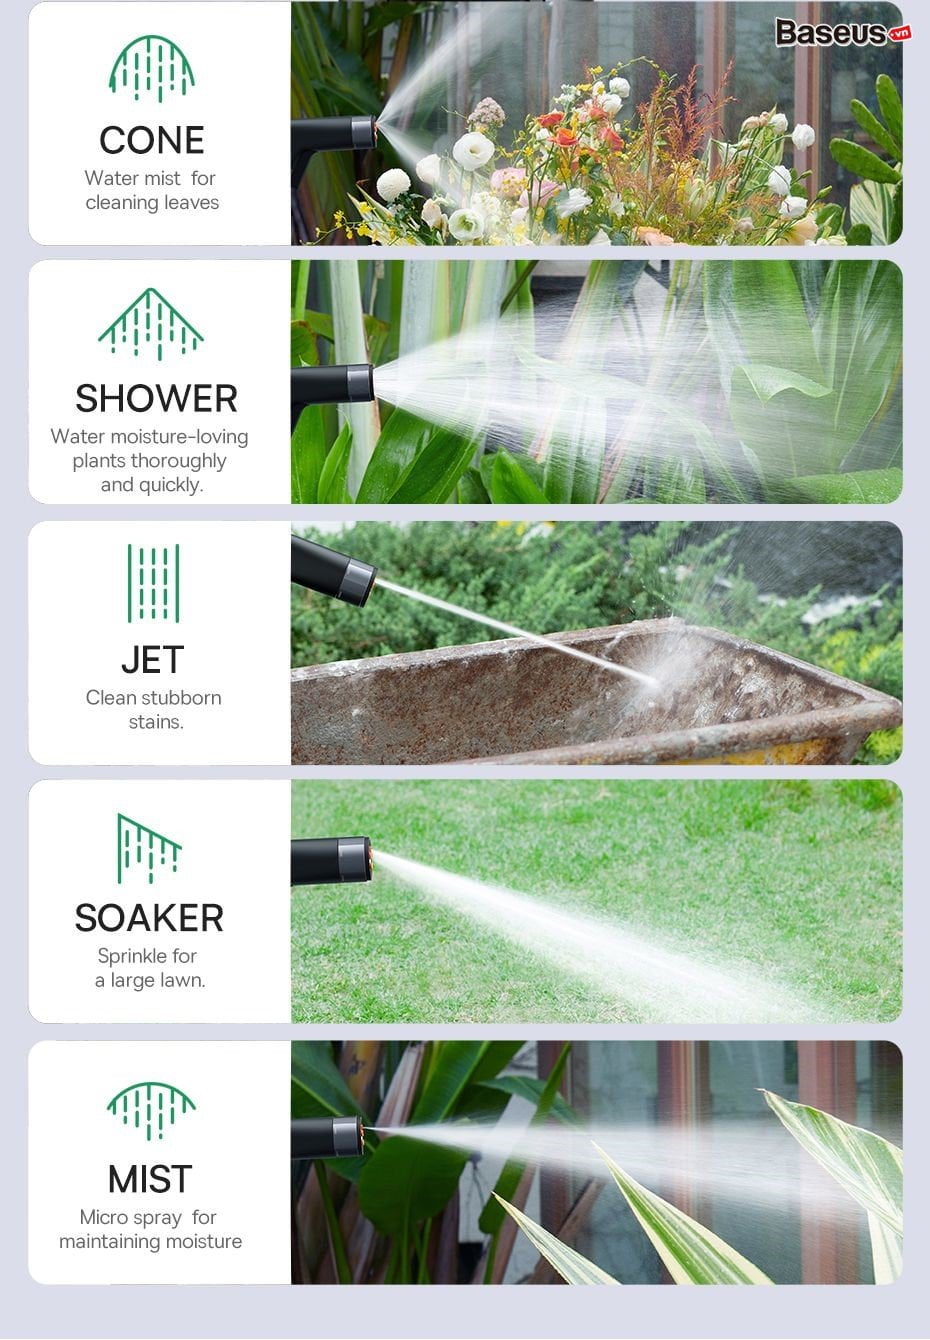 baseus gf4 horticulture watering spray nozzle images 59 a74f7291af6447b7aa95a494e40e10da